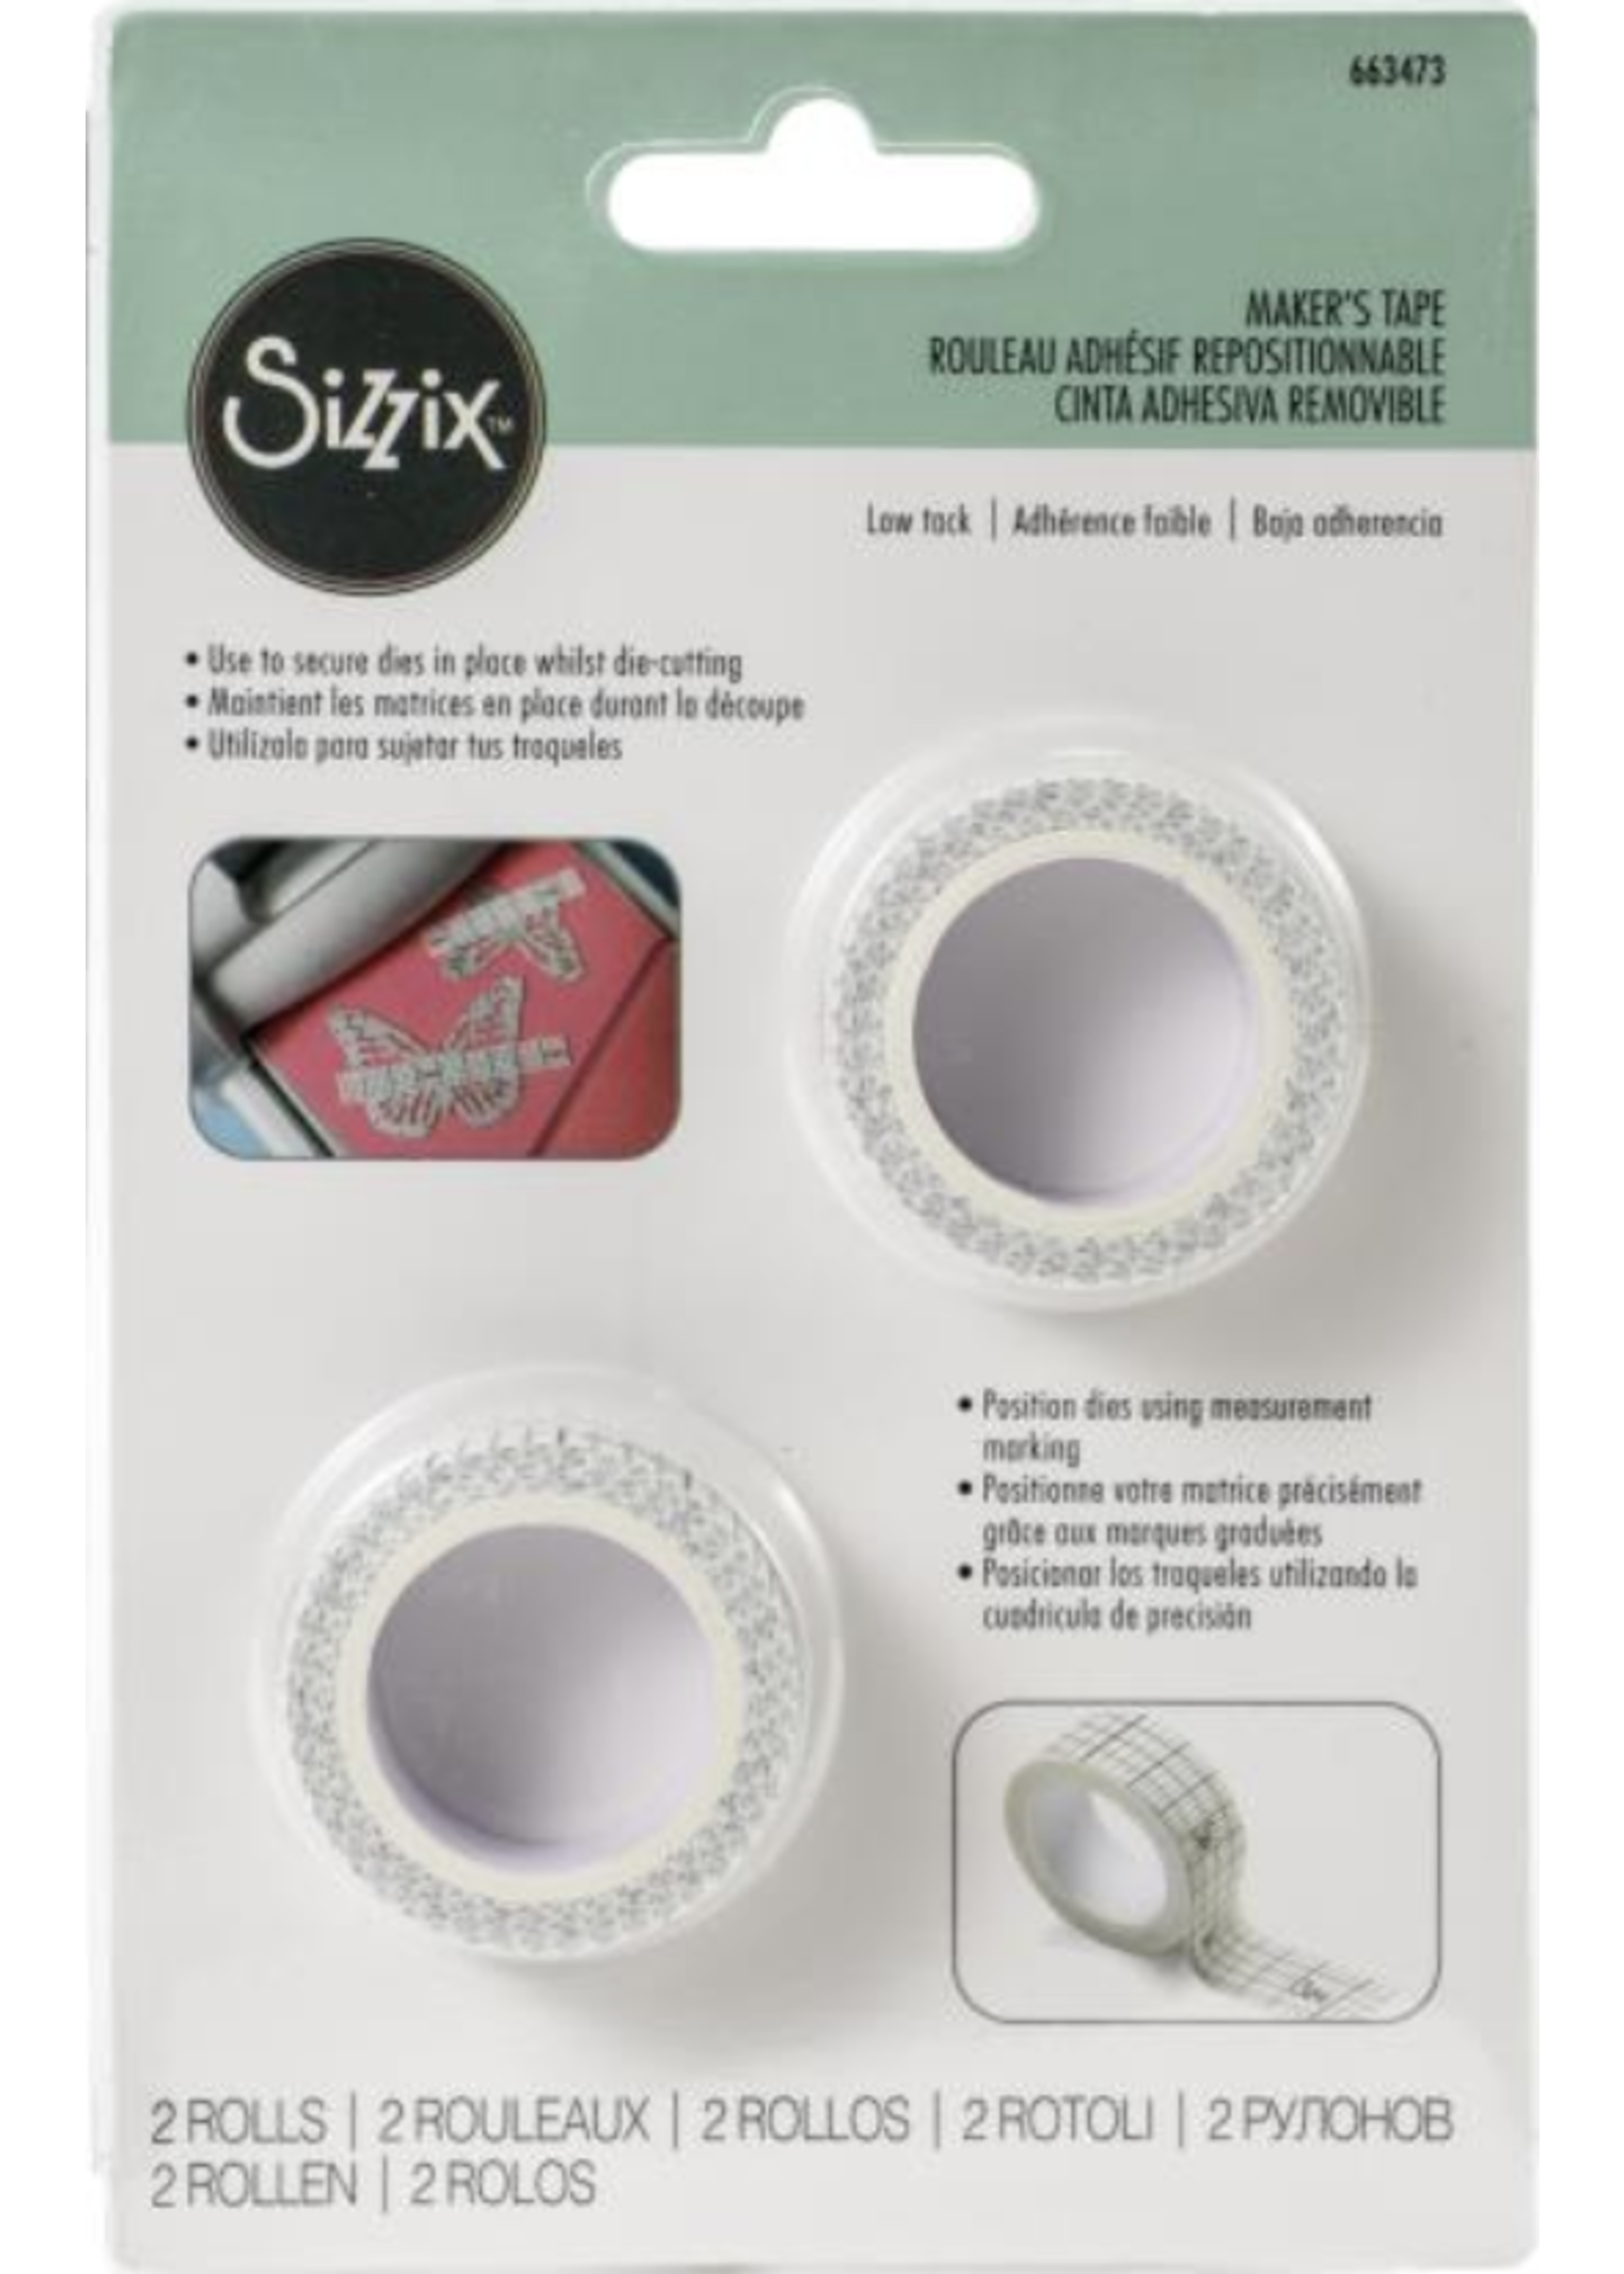 Sizzix Maker's Tape